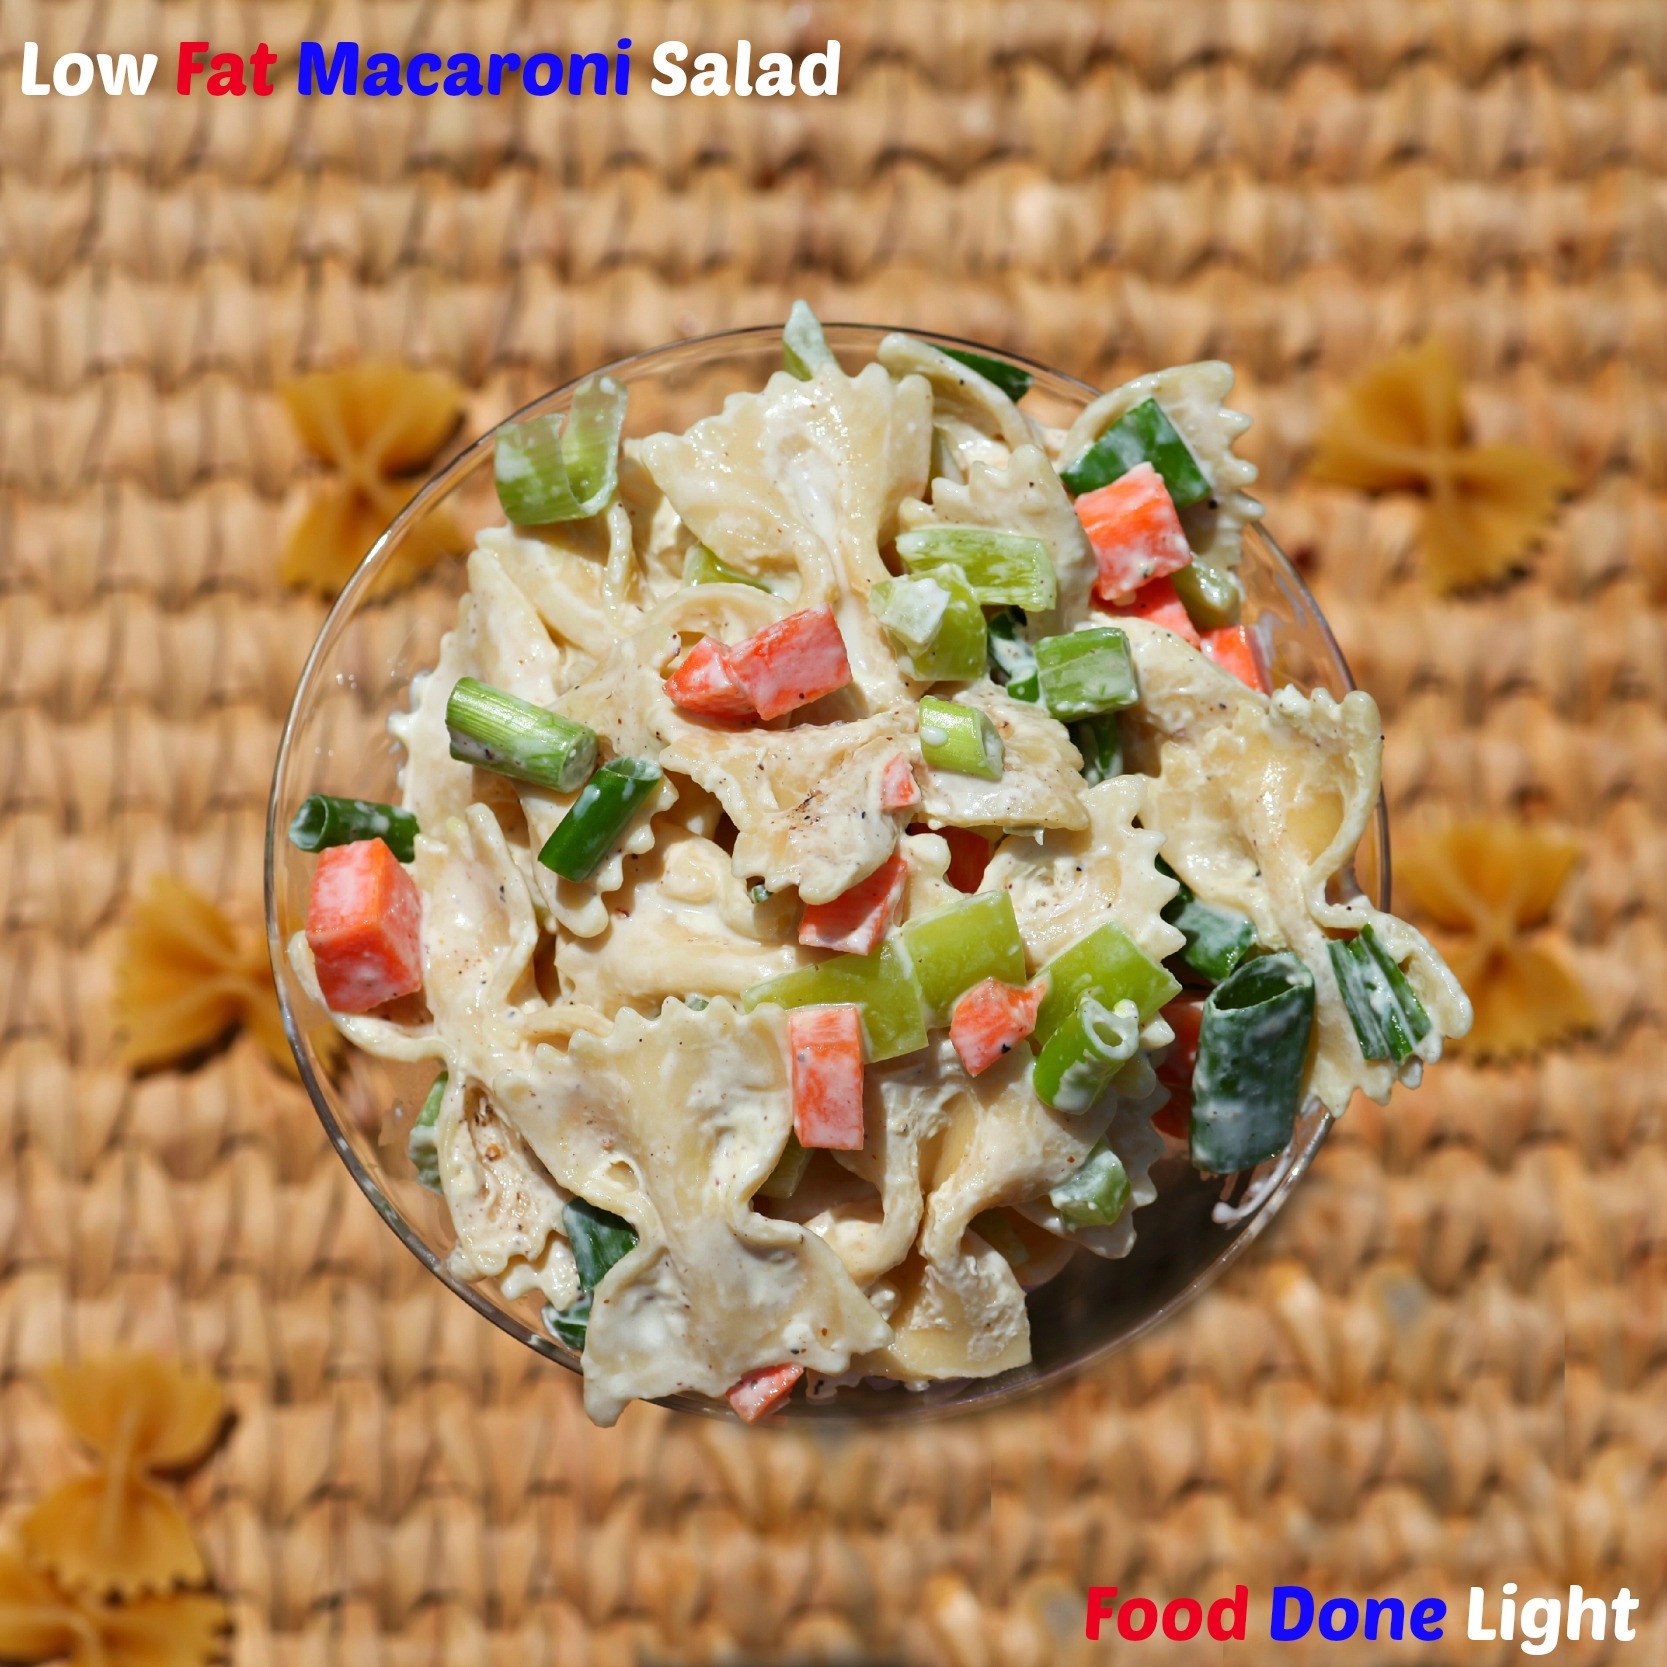 Low Calorie Macaroni Salad
 Low Fat Macaroni Salad Healthy Low Calorie Food Done